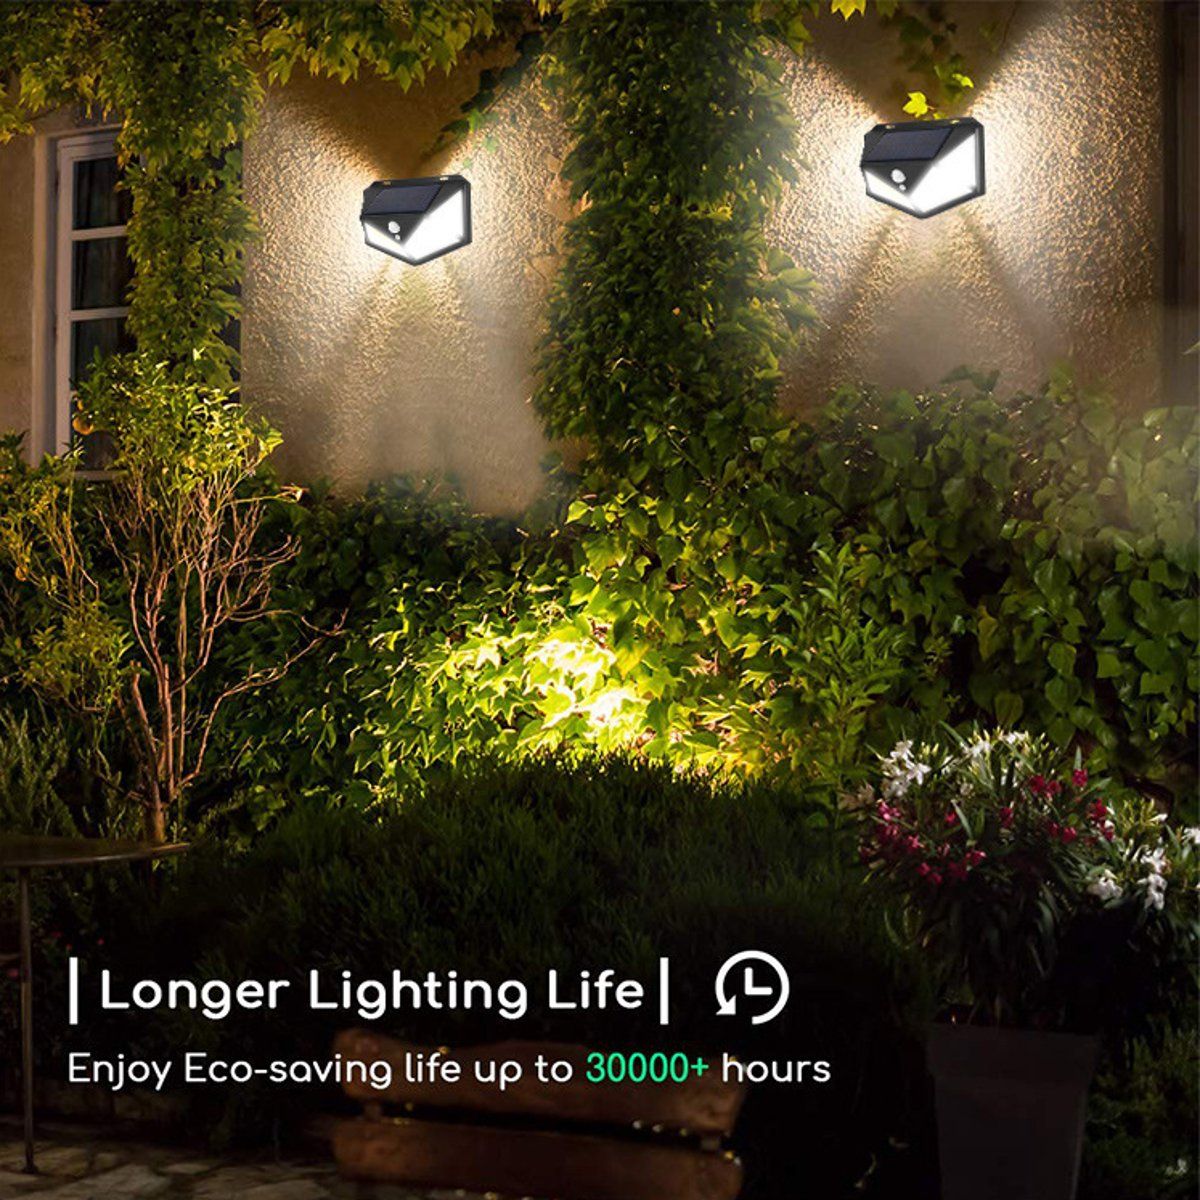 76120-COB-LED-Solar-Powered-PIR-Motion-Sensor-Wall-Light-Four-Sides-Outdoor-Garden-Lamp-1677205